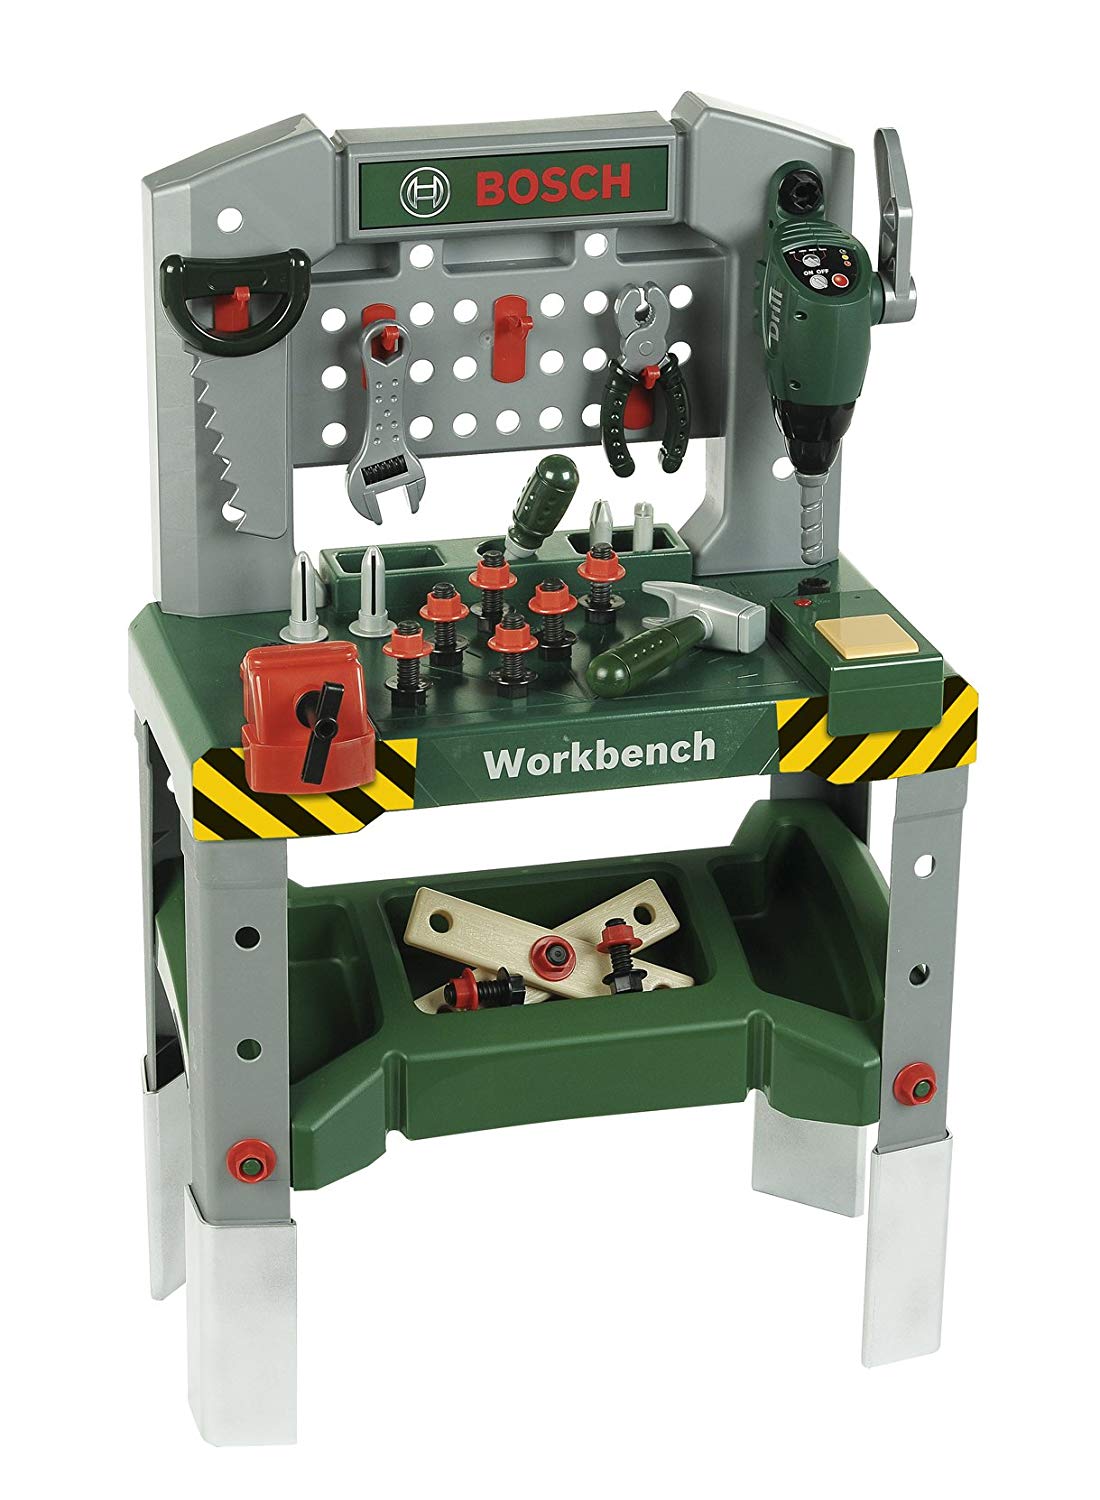 Bosch Toy Workbench With Sound Adjustable Height